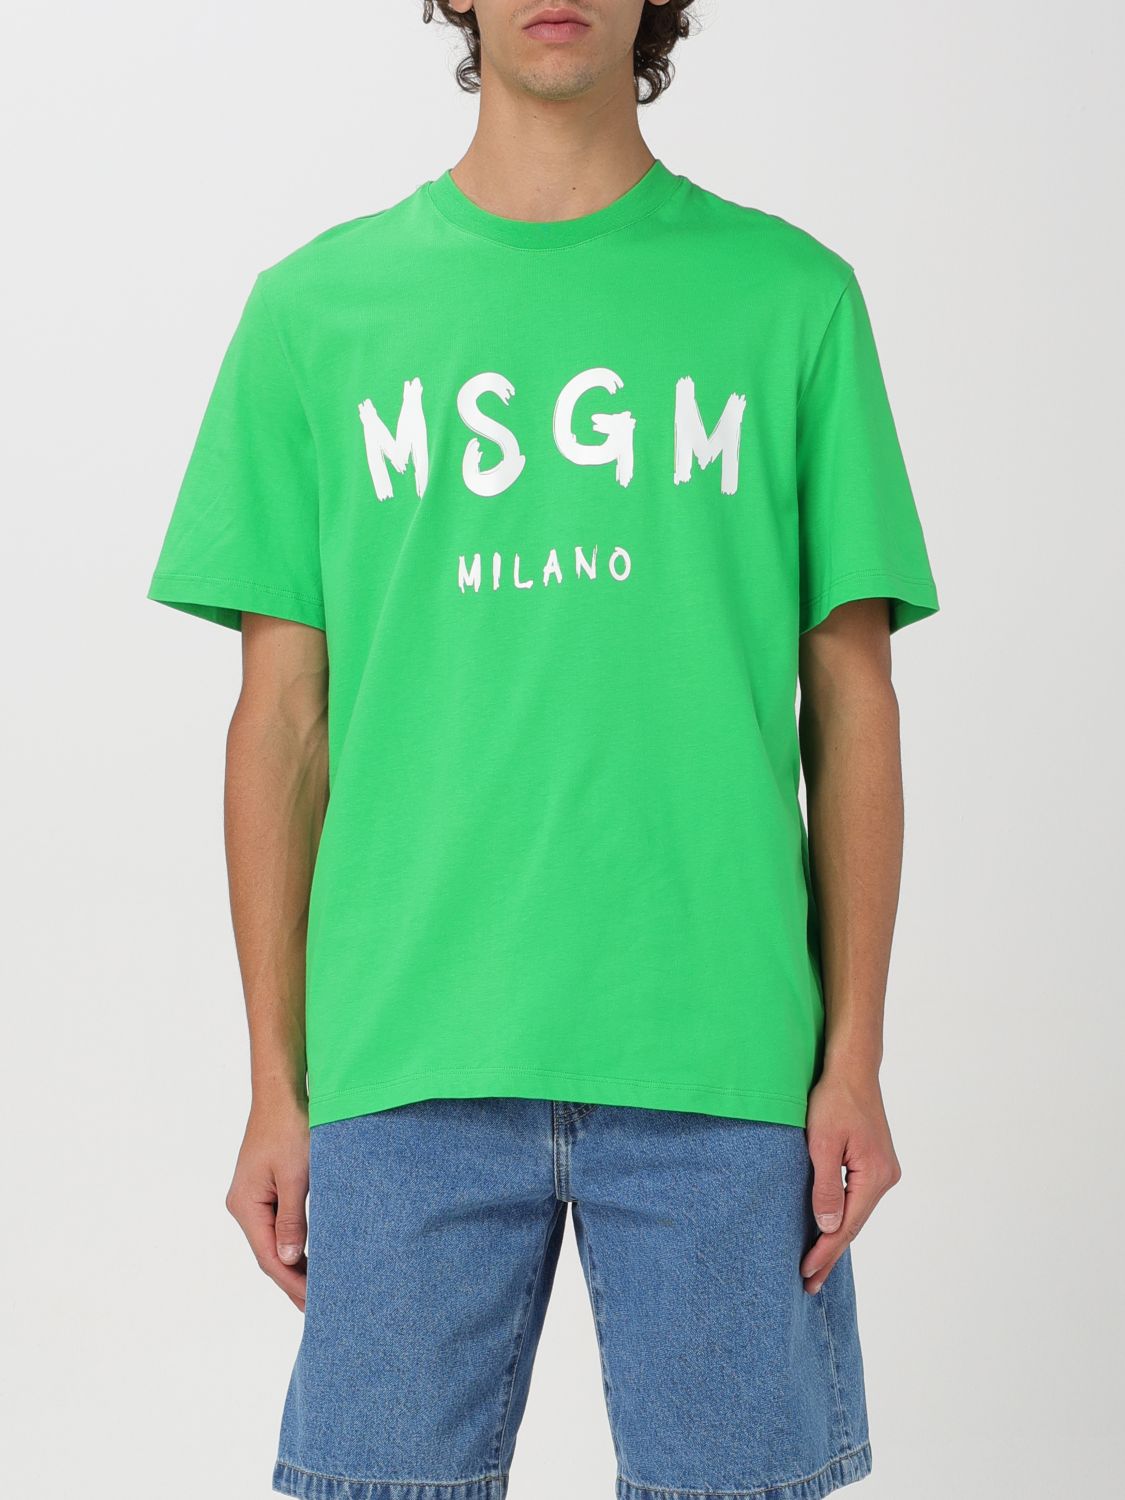 Msgm T-Shirt MSGM Men color Green